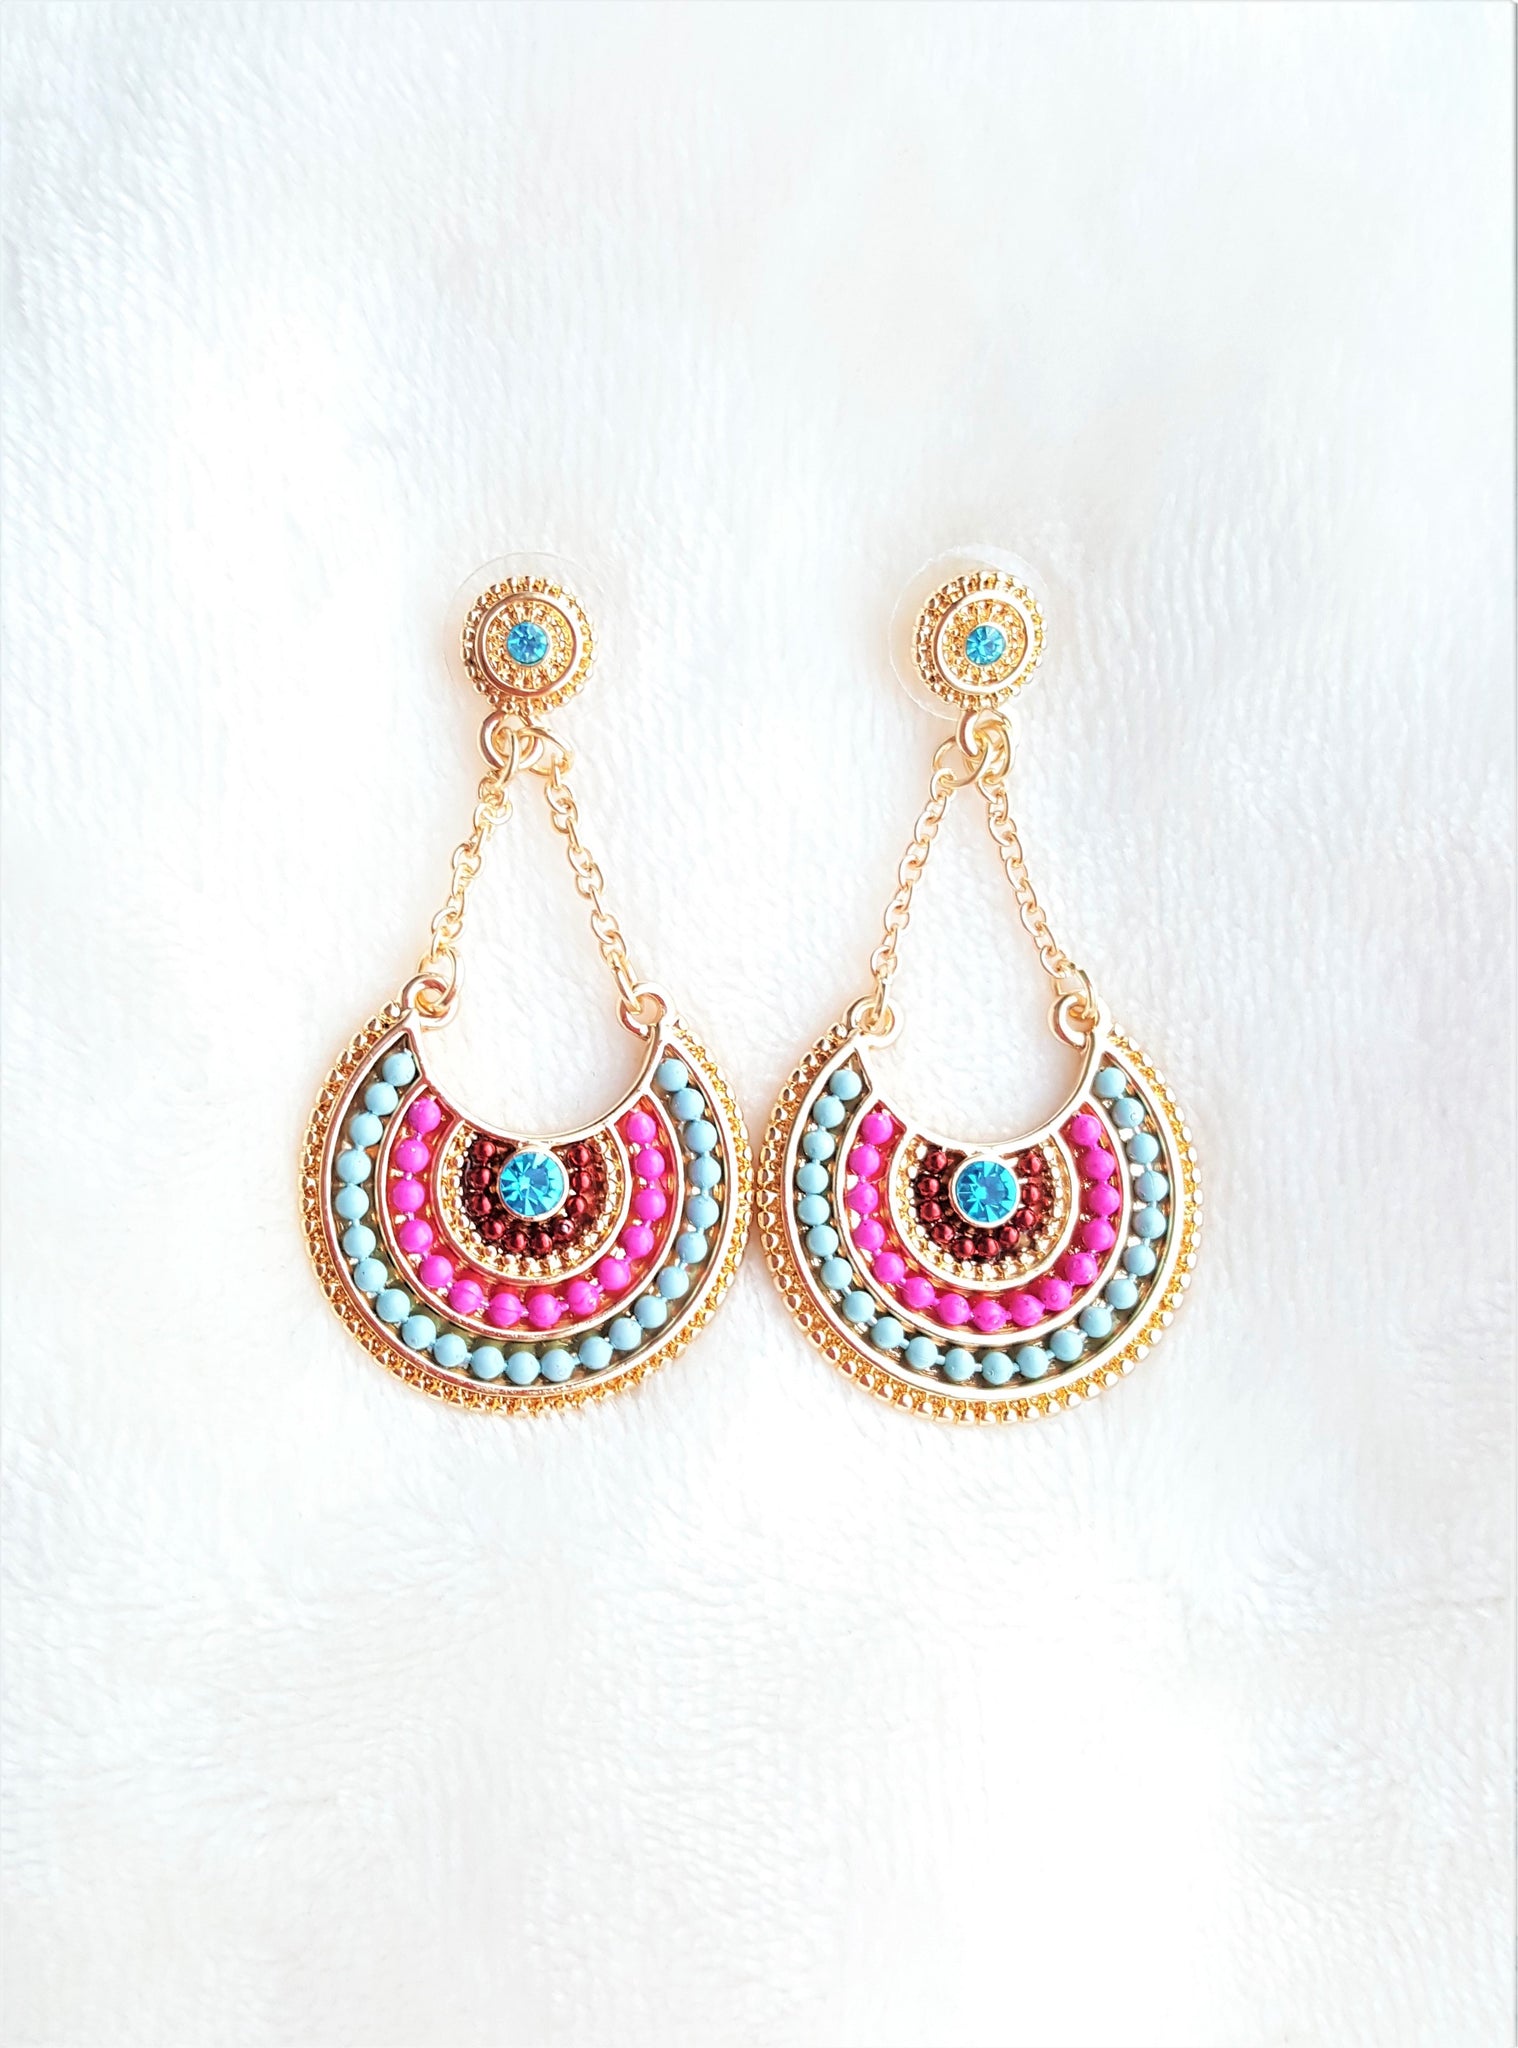 Earrings Ethnic Multicolored Resin Beads Rhinestone Gold Chain Fringe ...